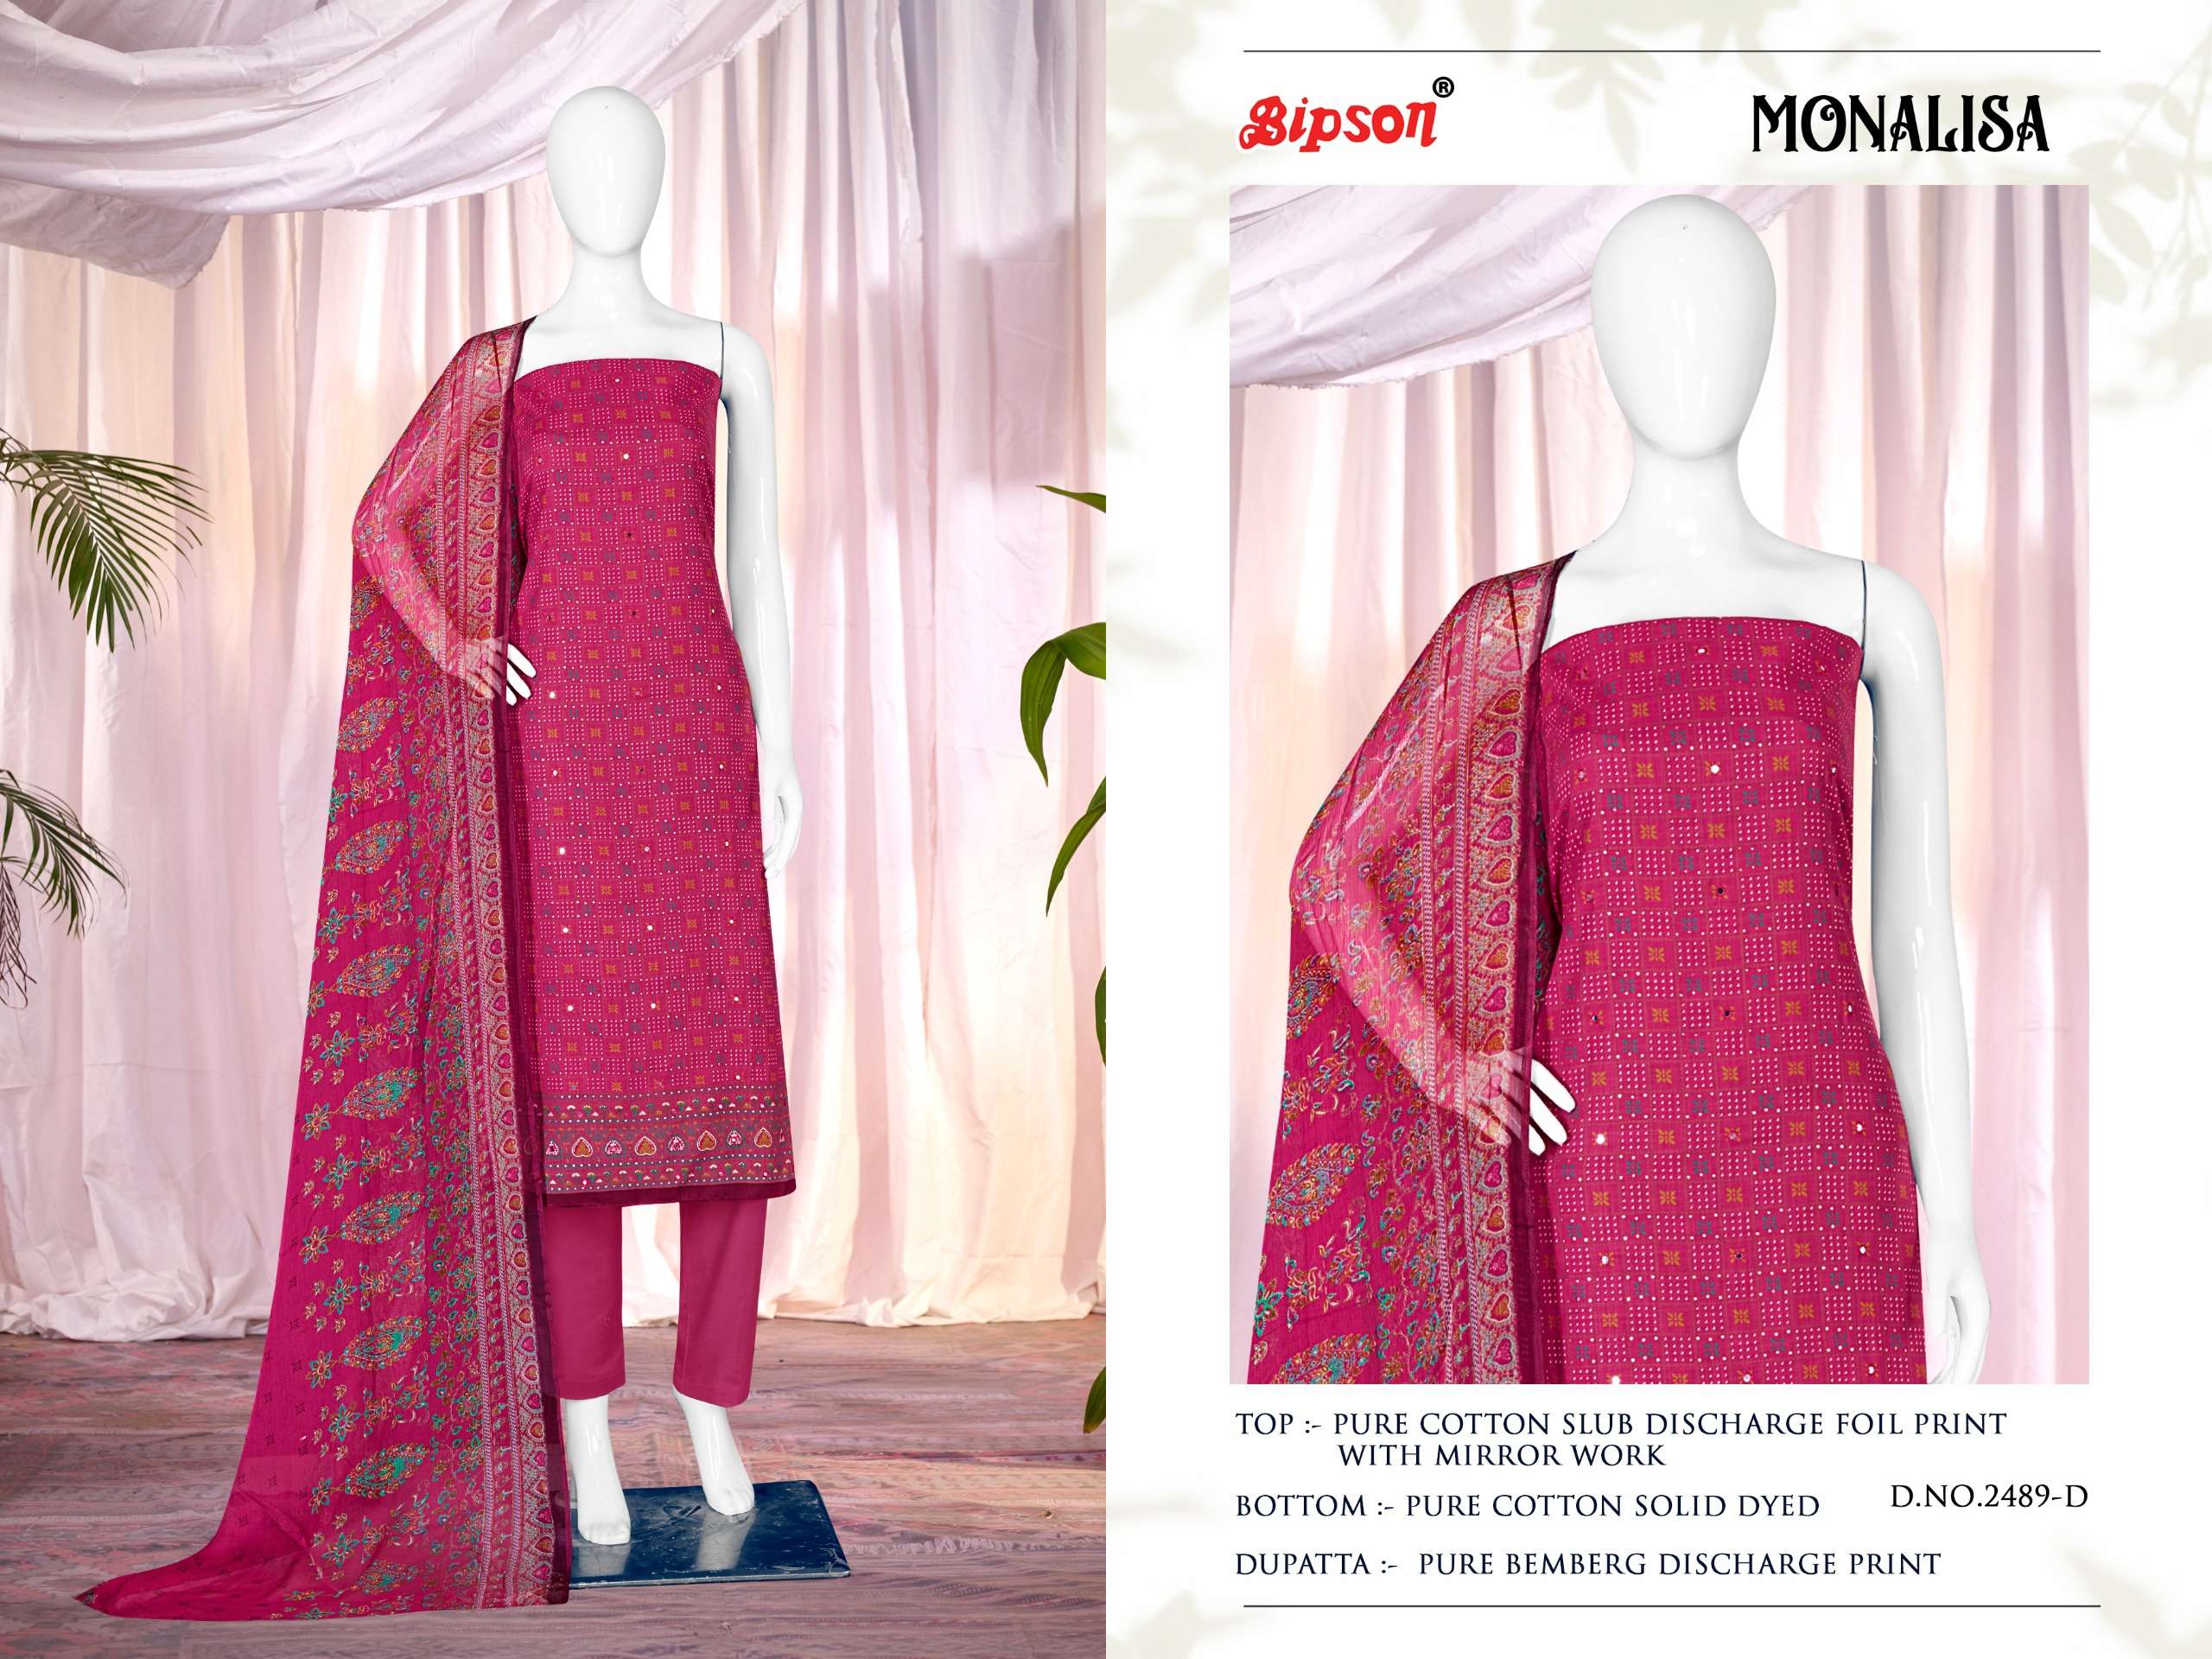 Bipson monalisa 2489 cotton  gorgeus salwar suit catalog